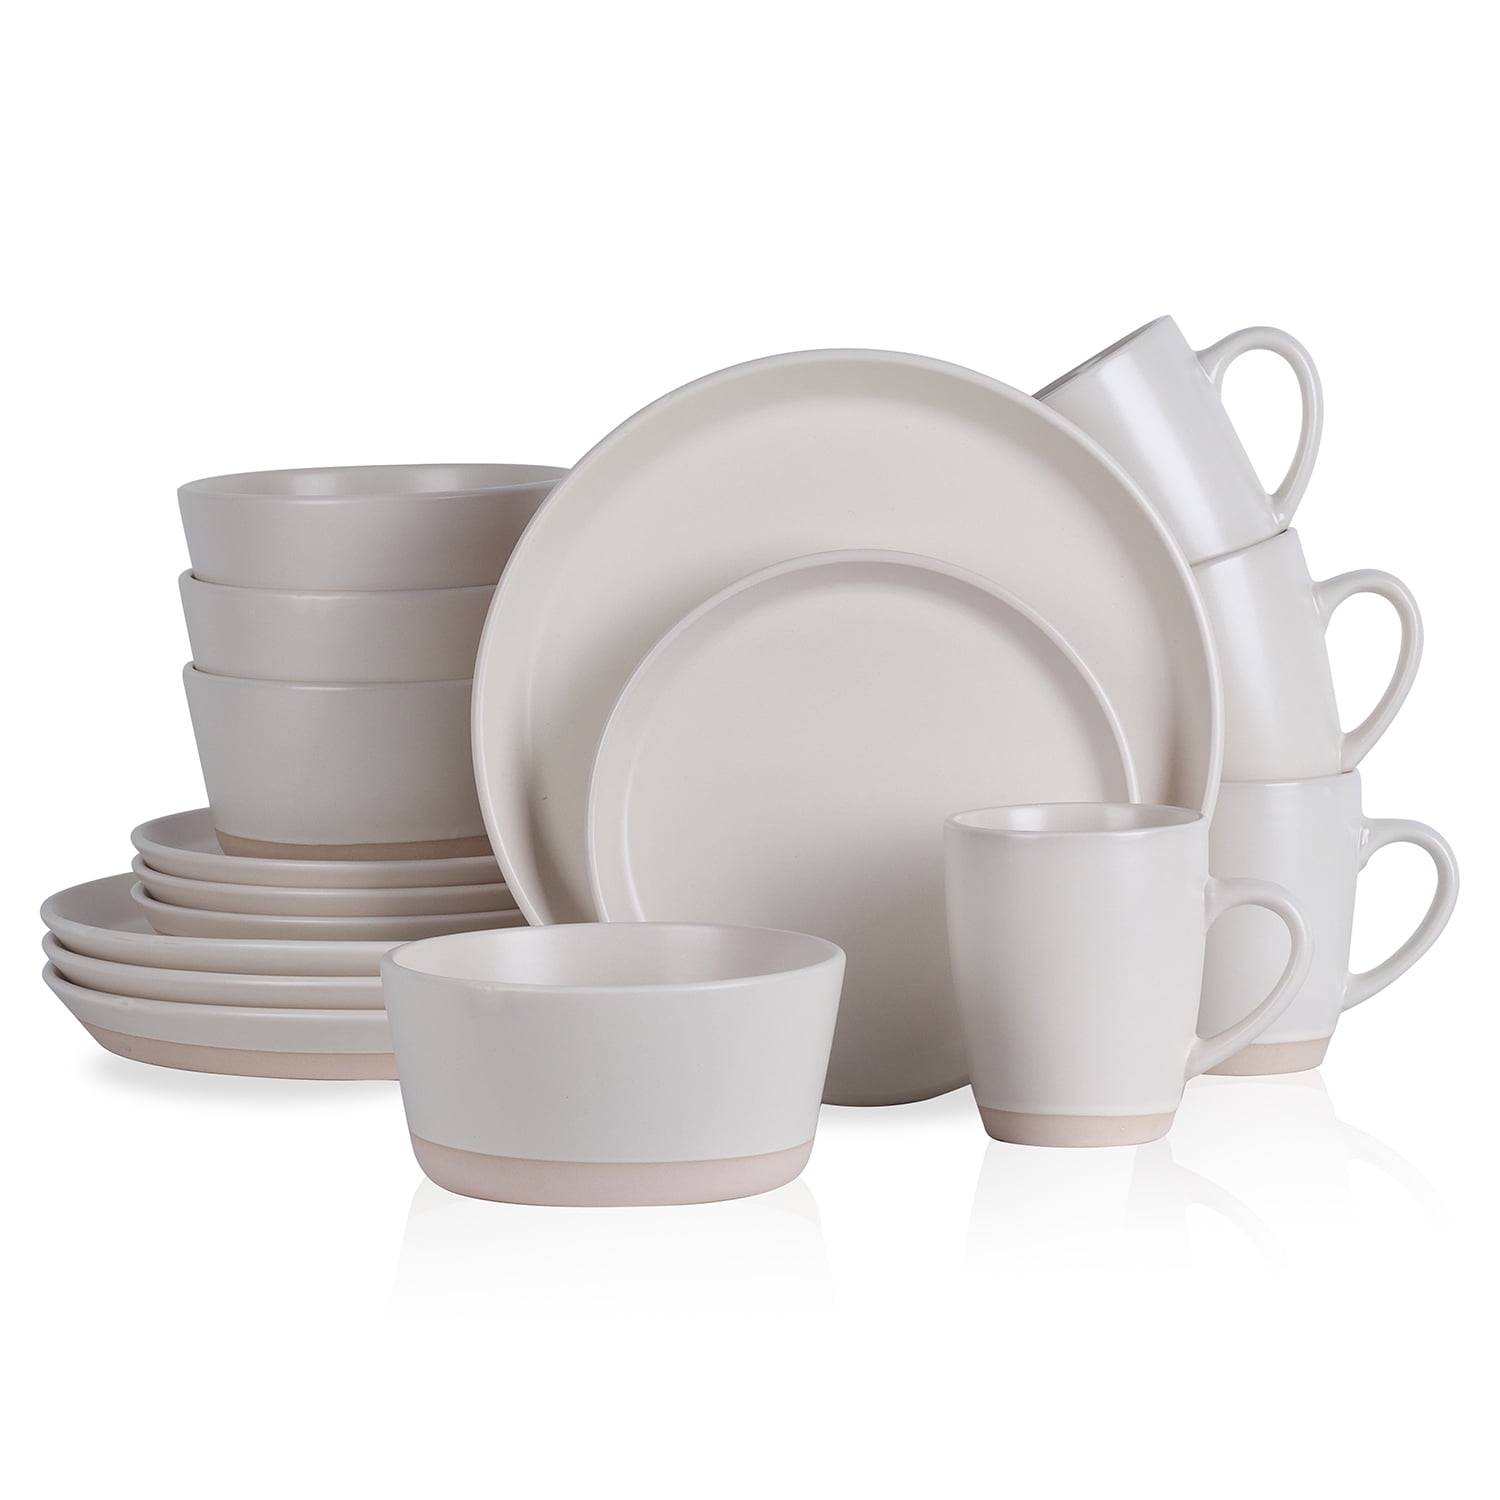 Dinnerware Sets Including Dinner Plates Dessert Plates Fruit Bowls Mugs Tableware Set for Daily Use 16 Piece Ceramic Dinnerware Set Service for 4 Gray 